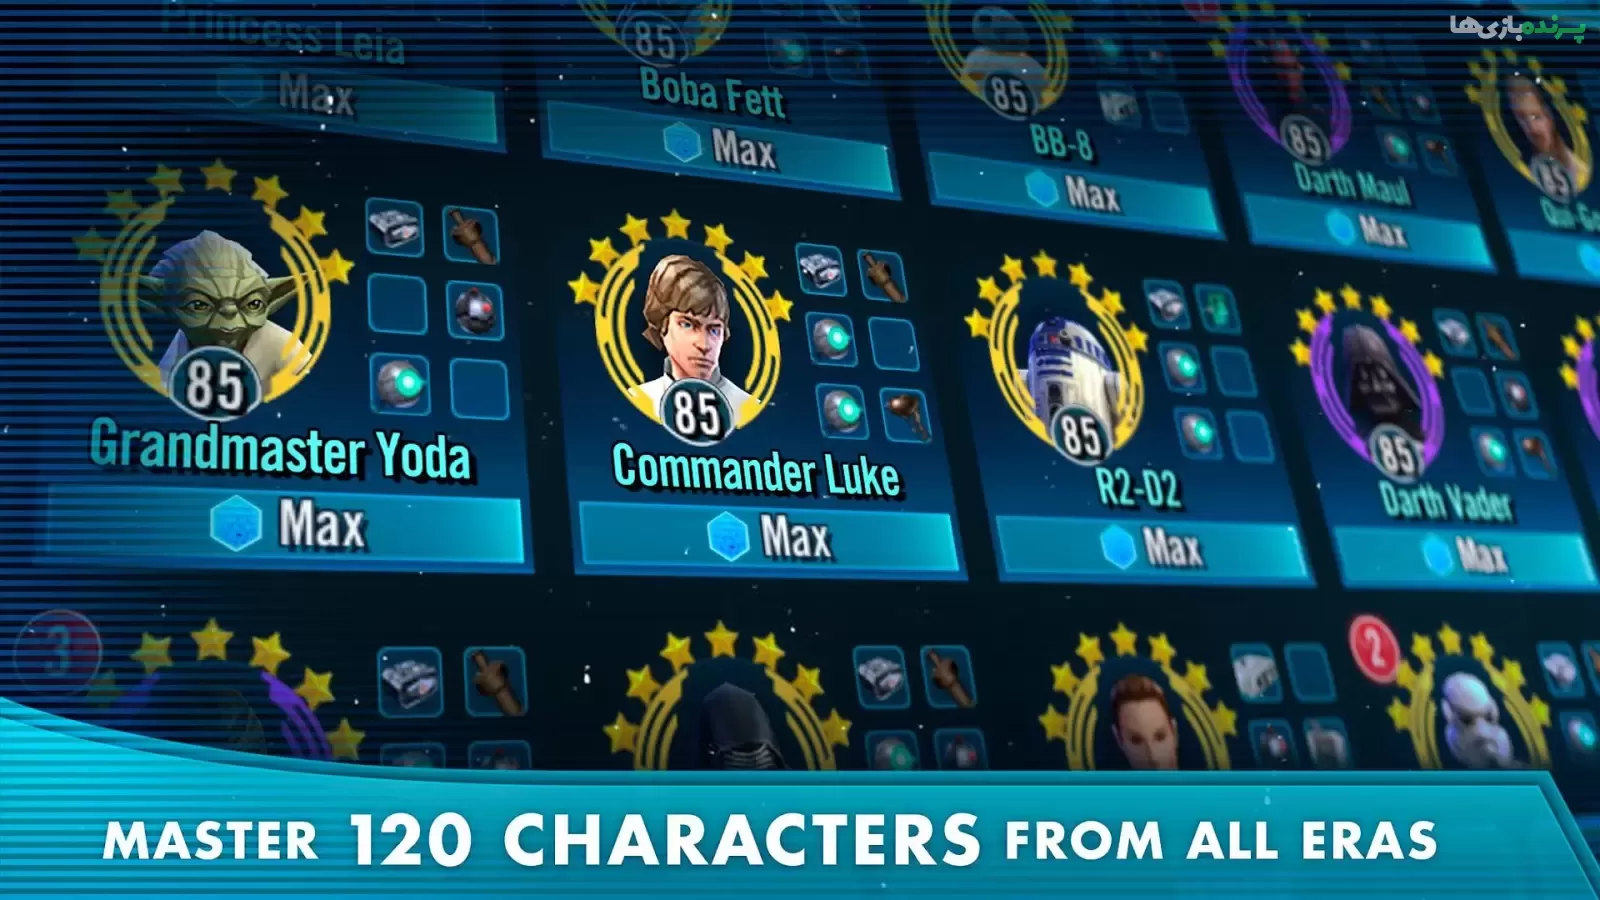 Star Wars: Galaxy of Heroes 0.33 – بازی نقش‌آفرینی جنگ ستارگان اندروید 